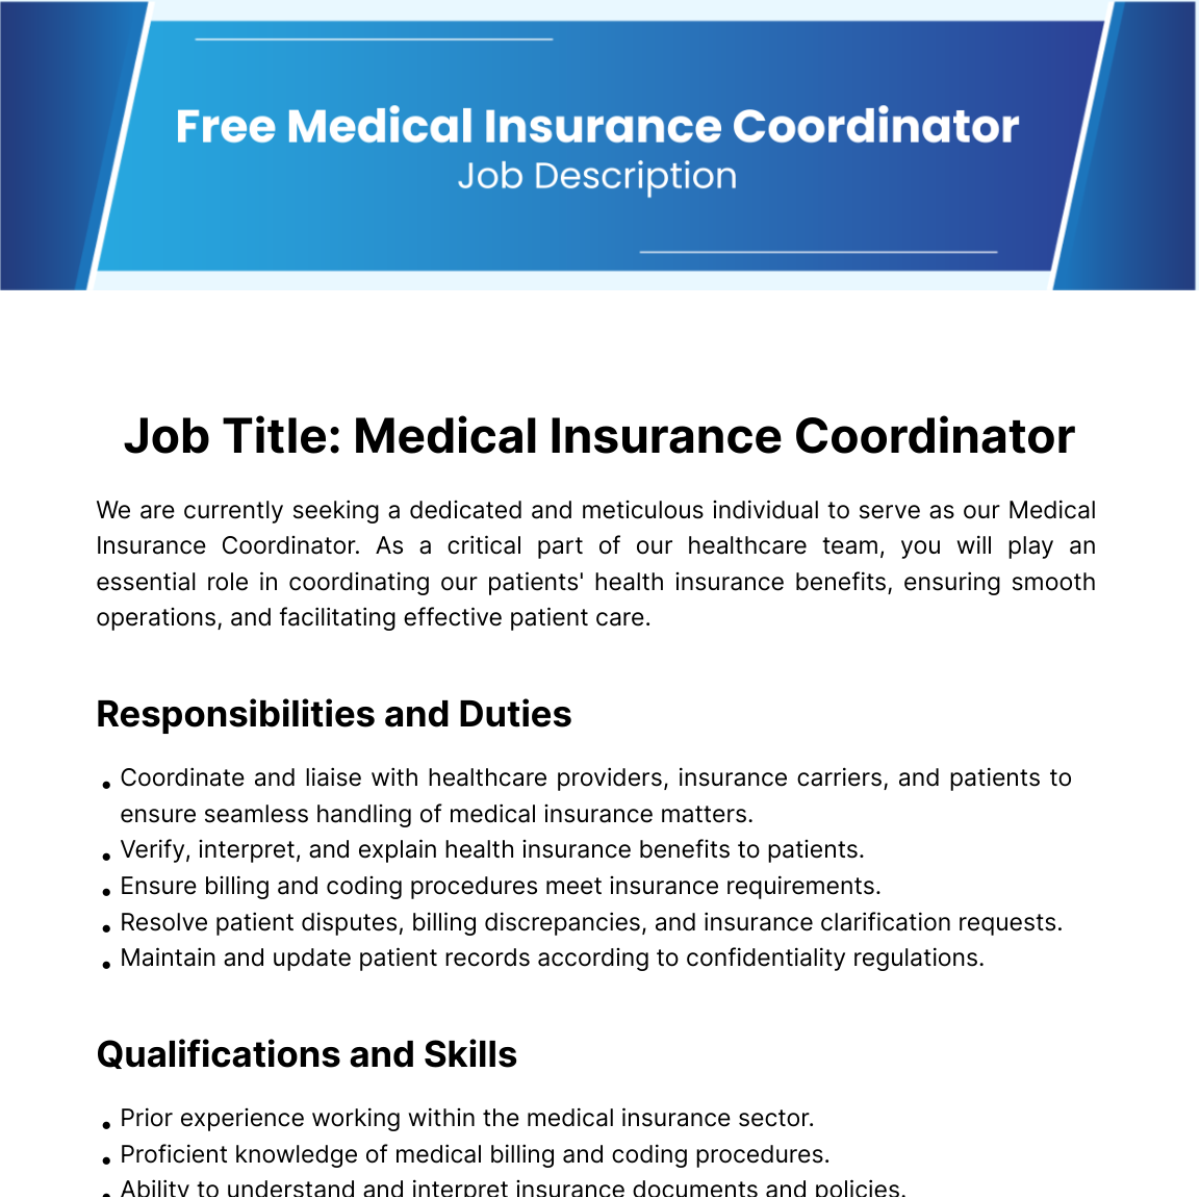 Free Medical Insurance Coordinator Job Description Template